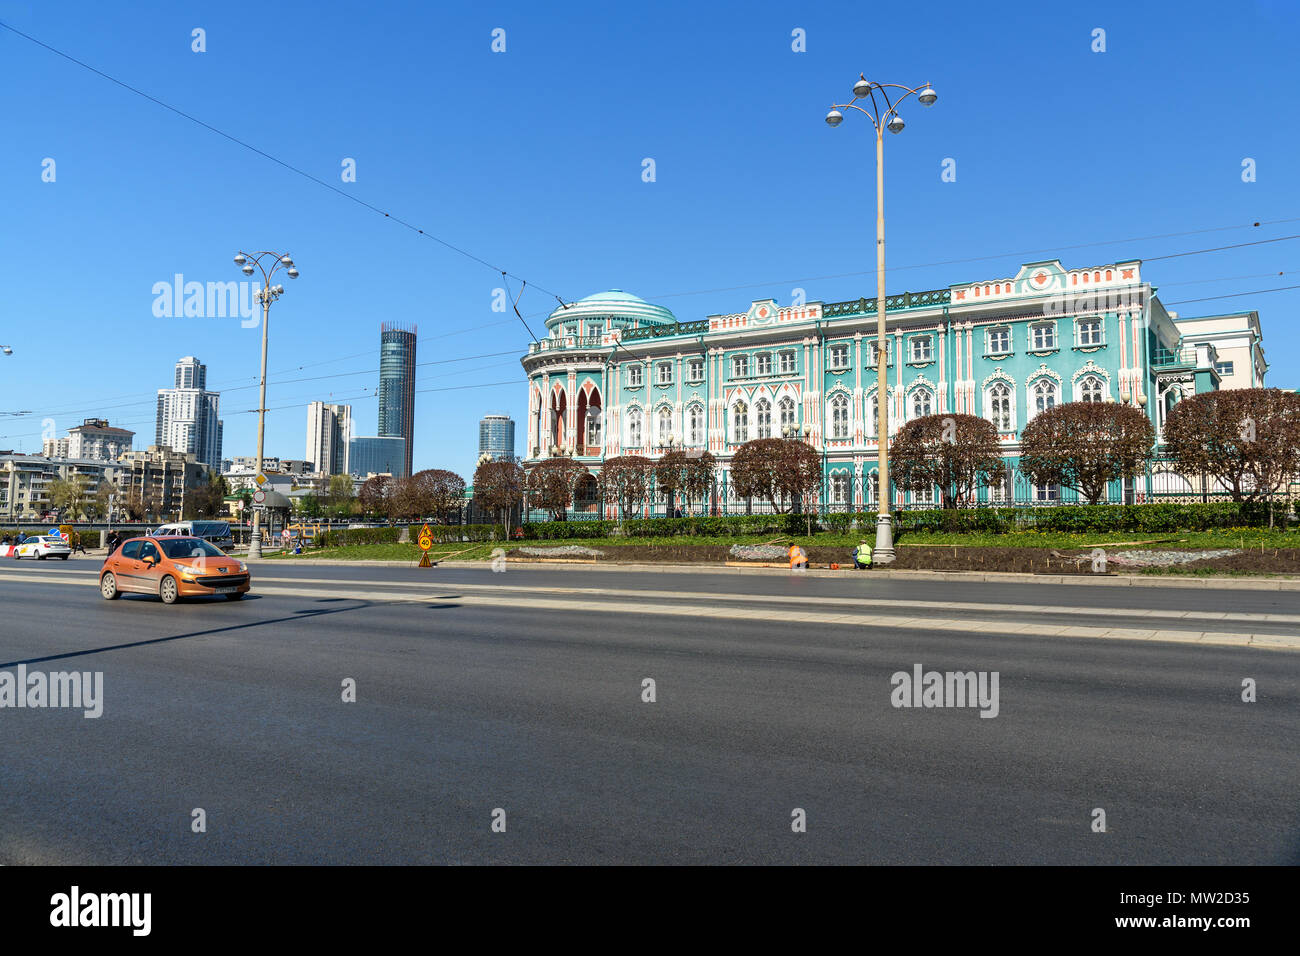 Yekaterinburg, Russia - May 23, 2018: View of Nikolay Sevastyanov House in center of city Stock Photo